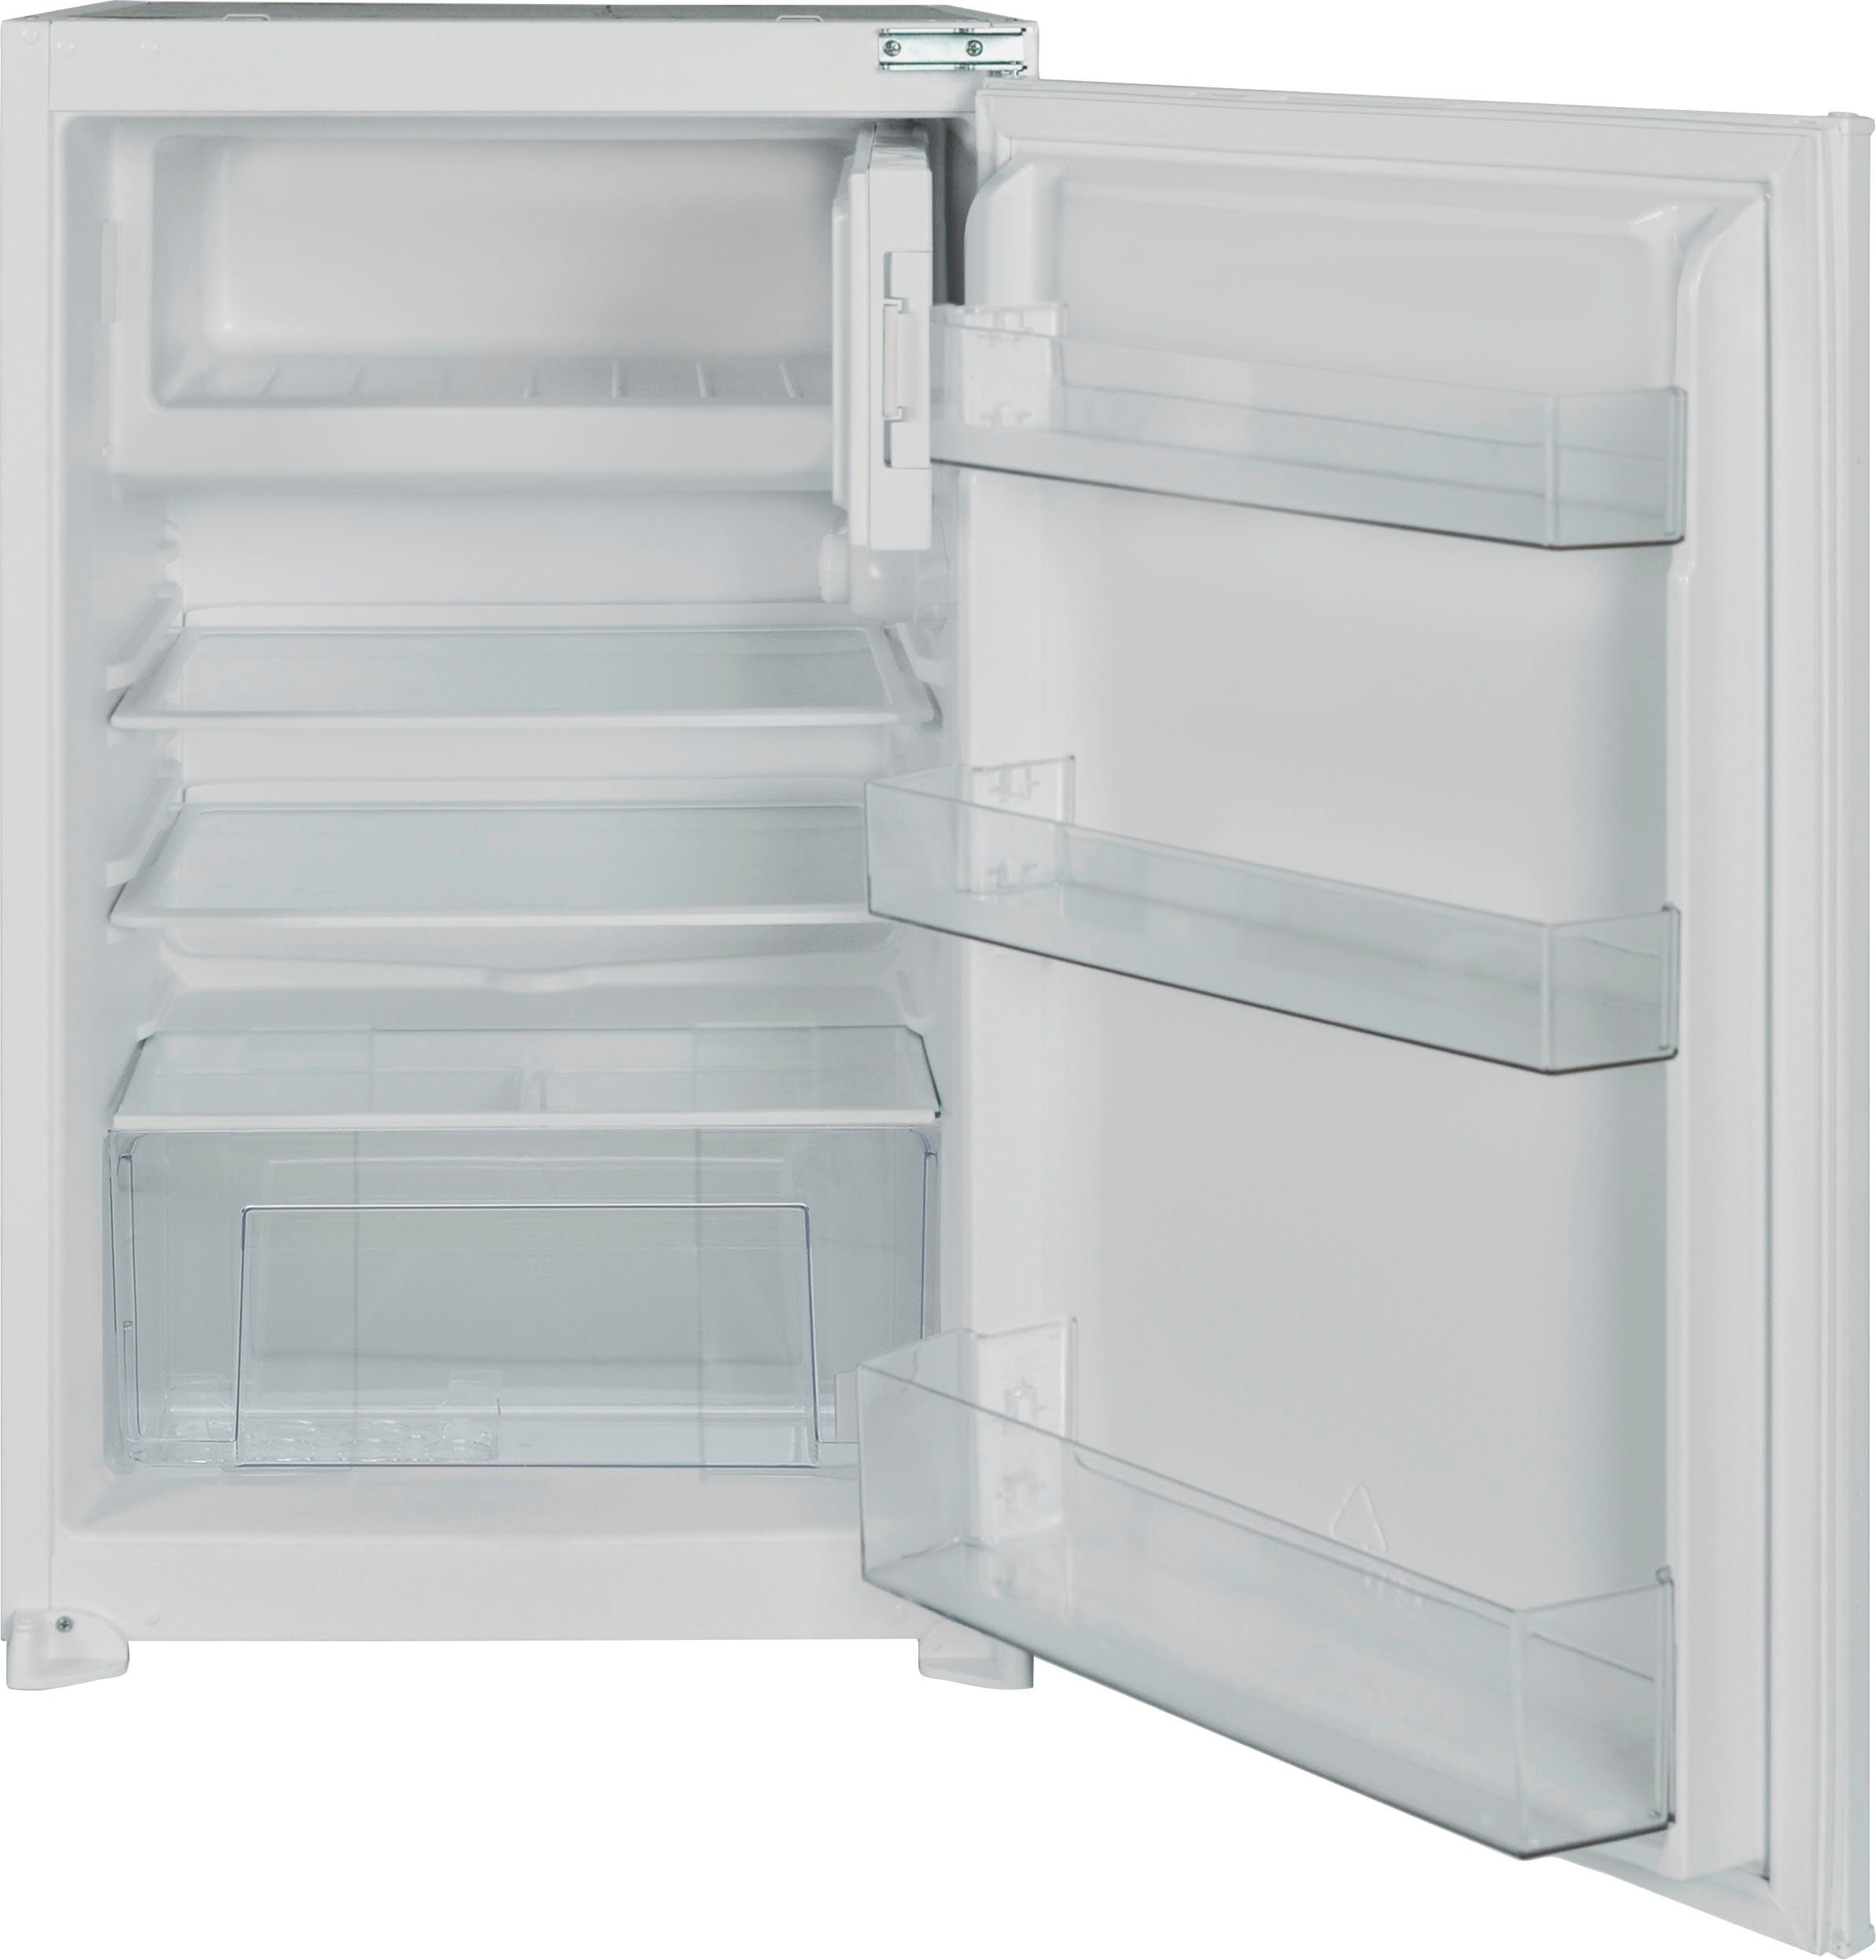 Kühlschrank Vintea, cm inklusive Küche 60 breit, Flex-Well